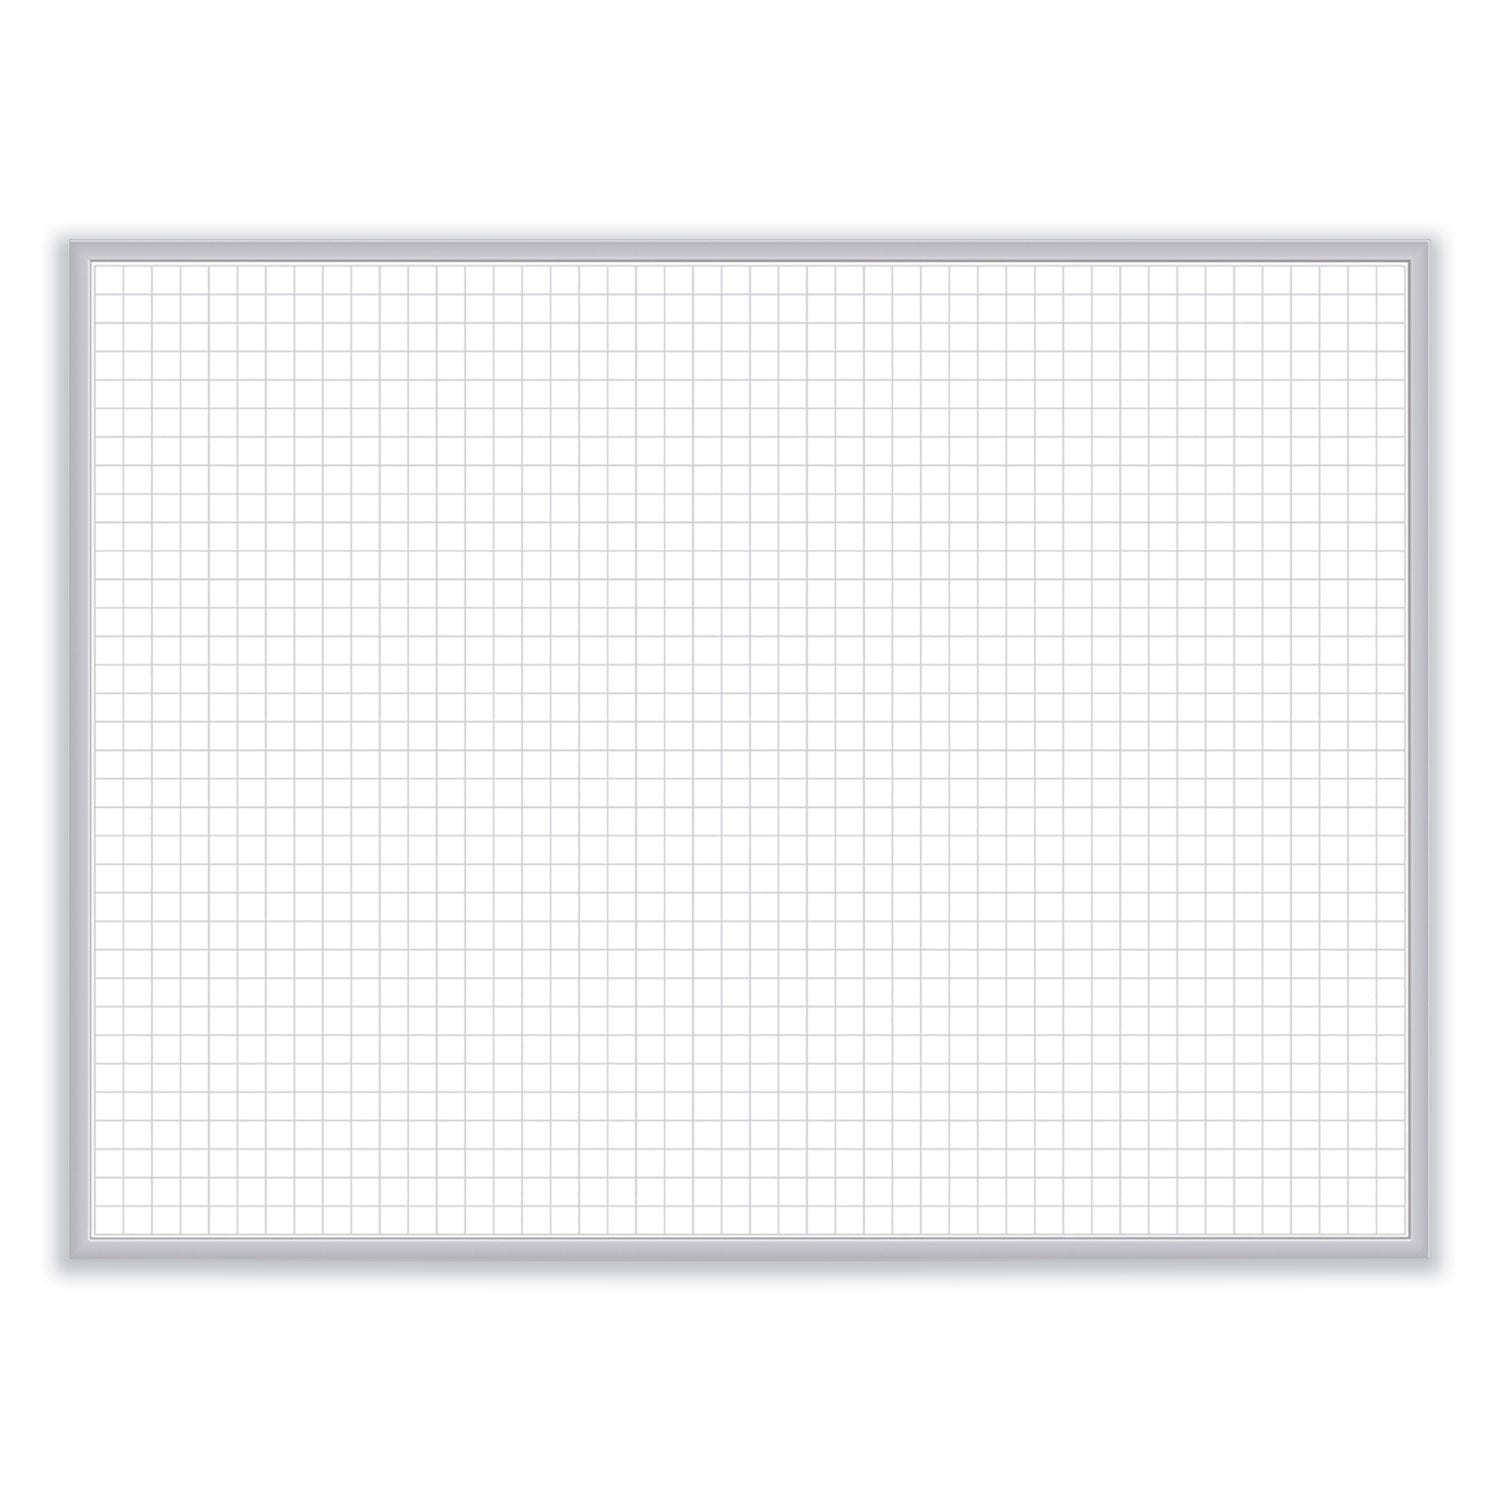 1-x-1-grid-magnetic-whiteboard-36-x-24-white-gray-surface-satin-aluminum-frame-ships-in-7-10-business-days_ghegrpm321g23 - 1